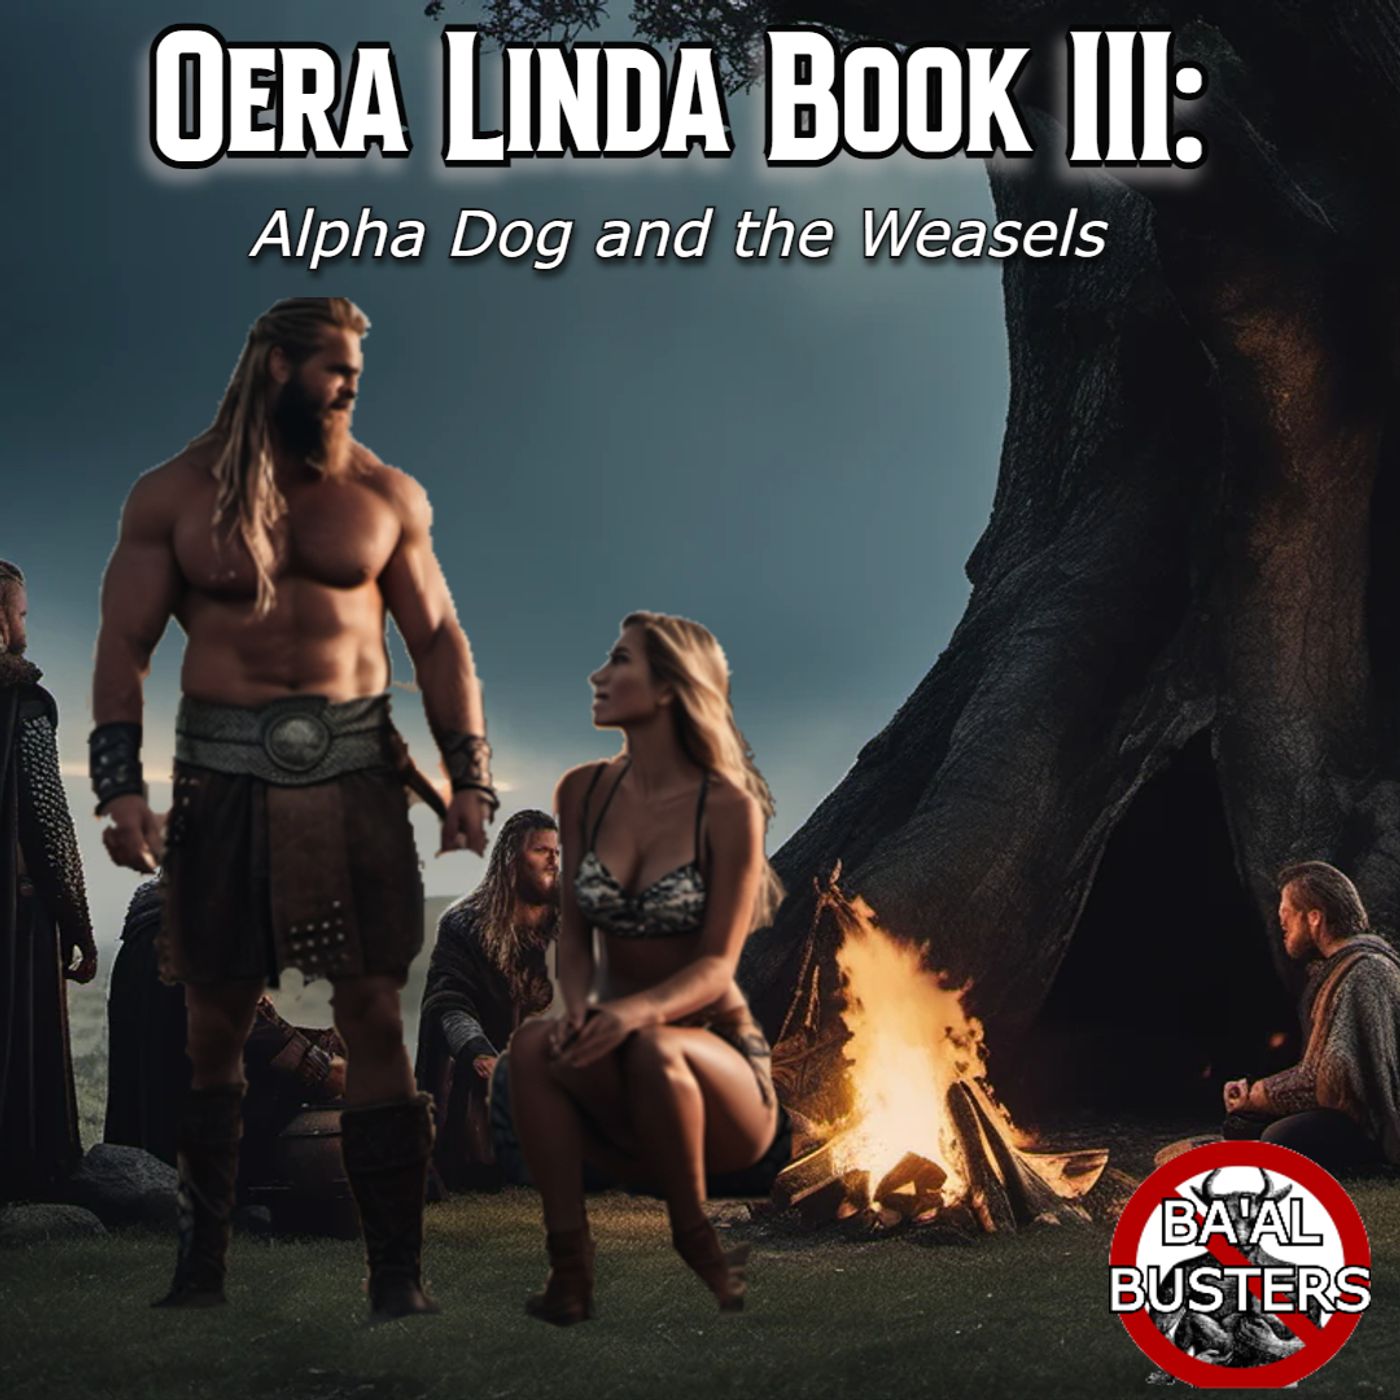 Oera Linda Book Ep. III, and the Sacrificial Home Land